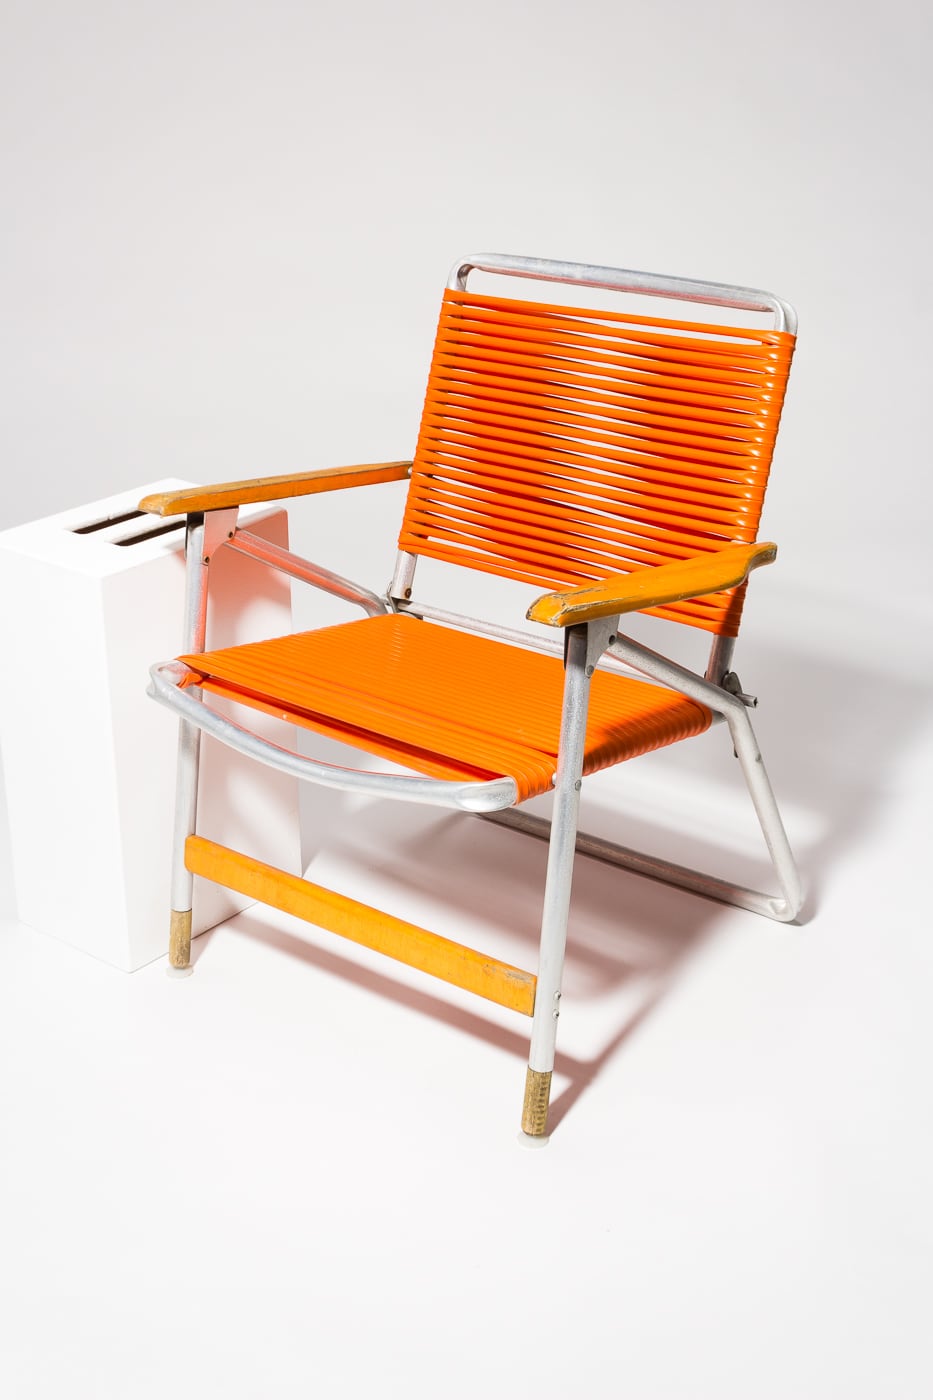 Creatice Miami Beach Chair Rentals Price with Simple Decor